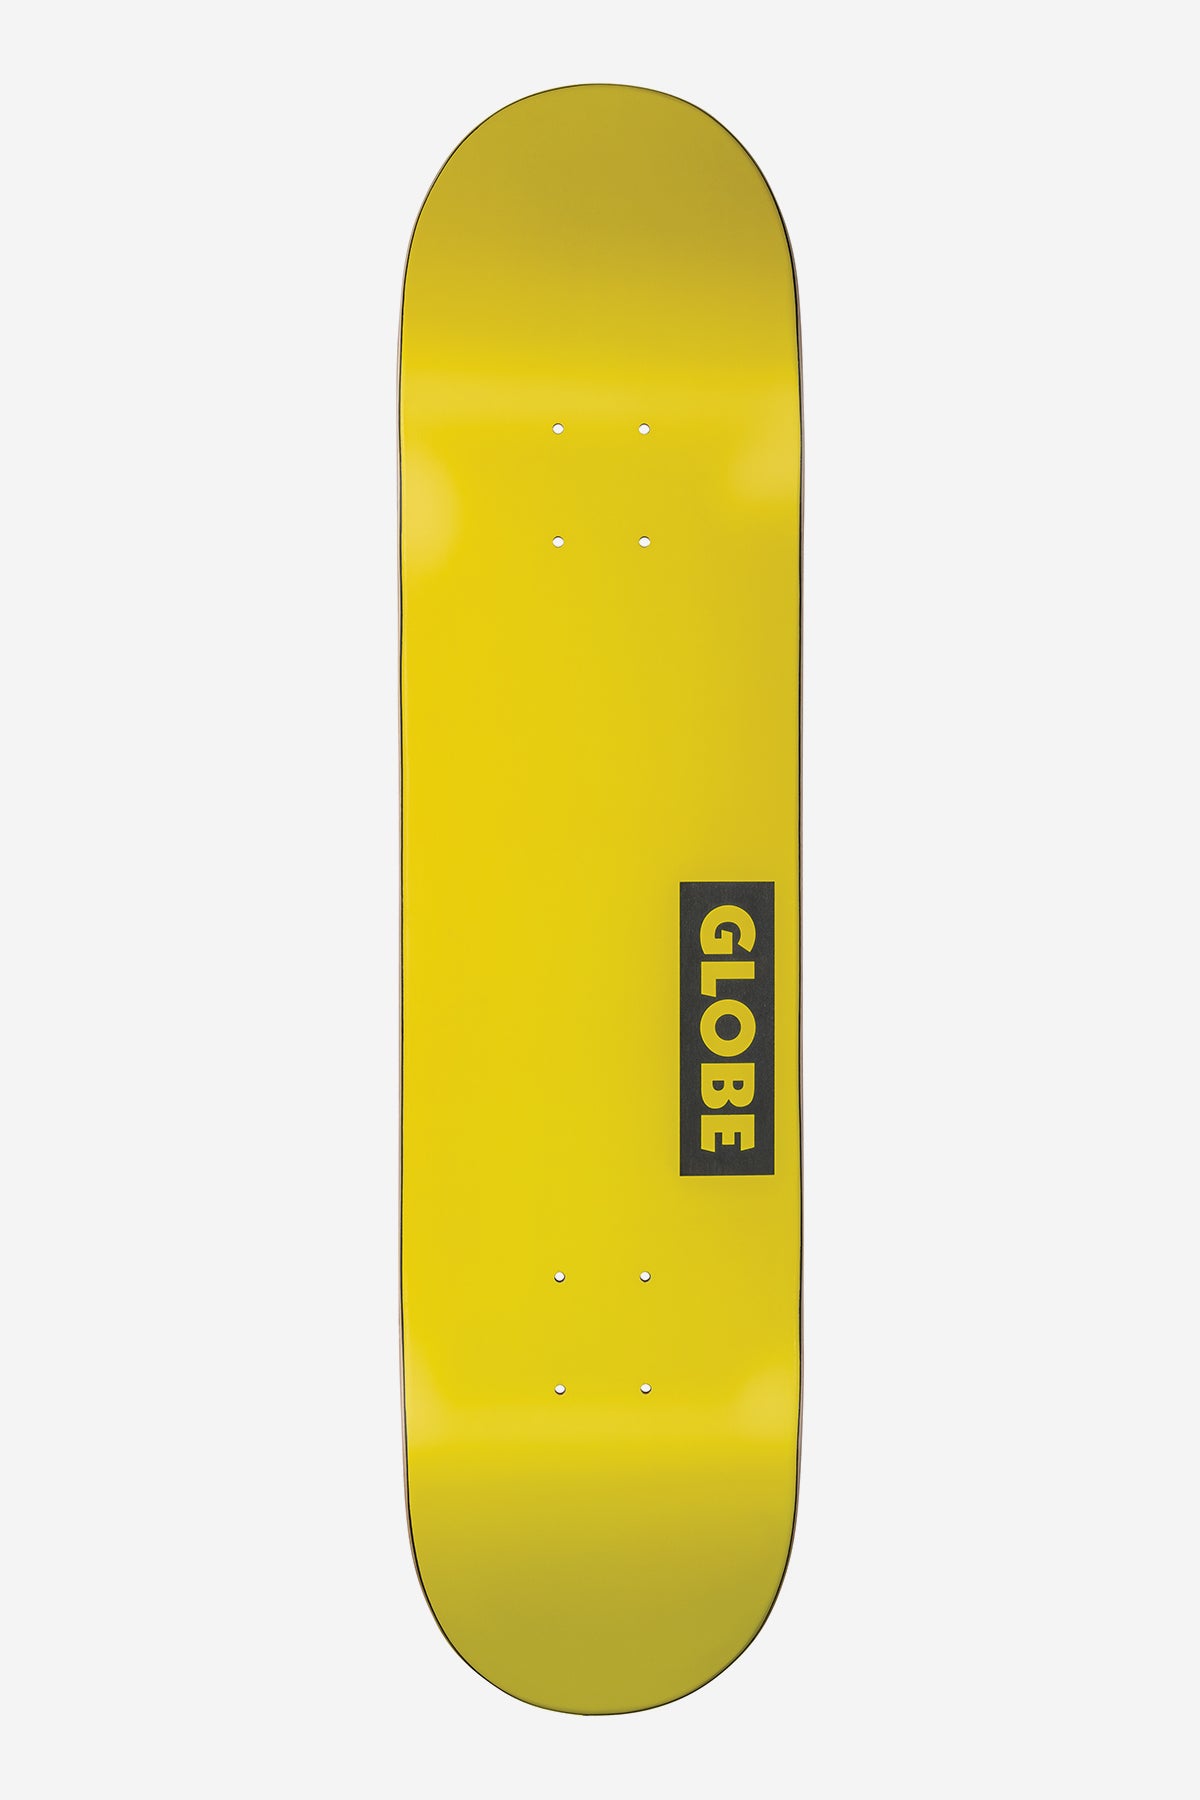 goodstock neon yellow 7.75" skateboard deck